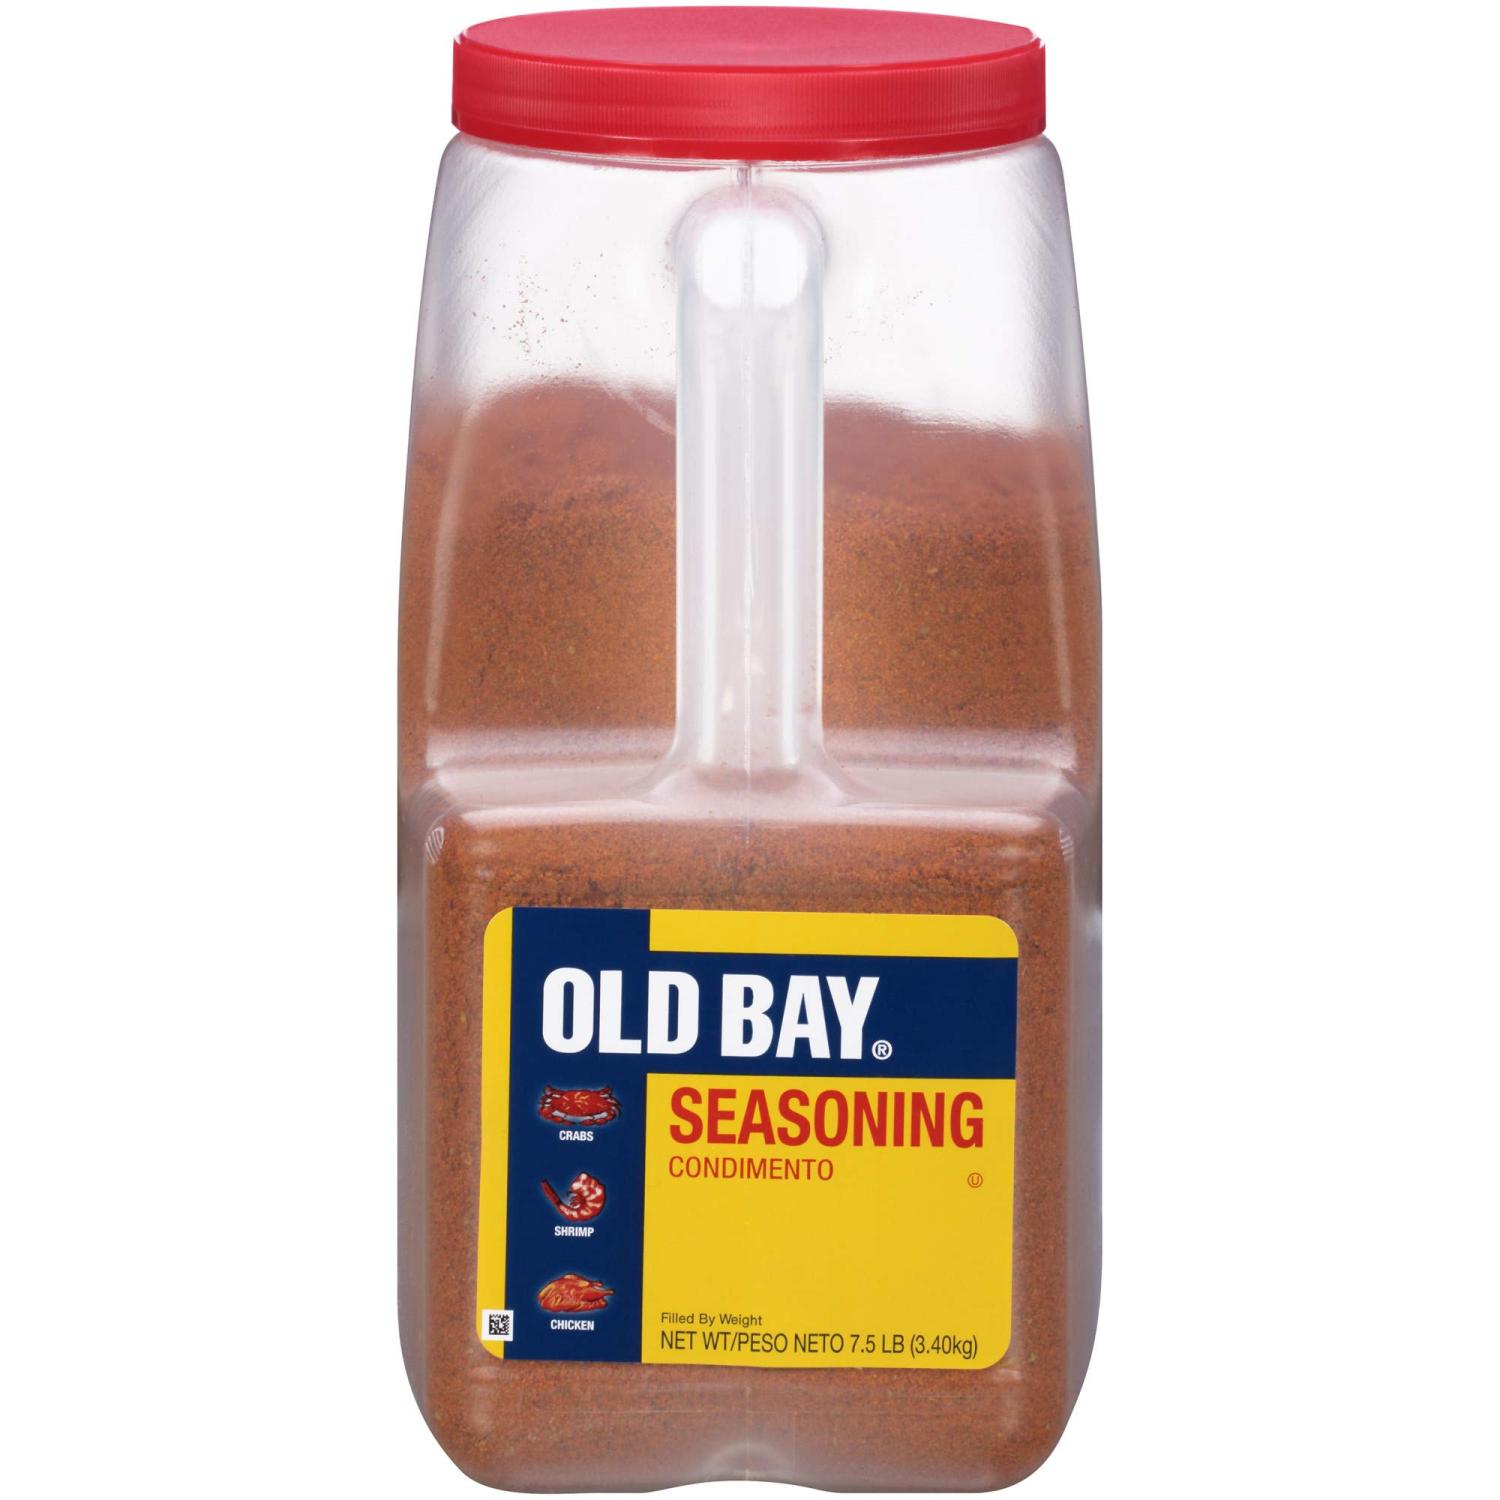 OLD BAY Seasoning, 7.5 lb (Original (2 pack)